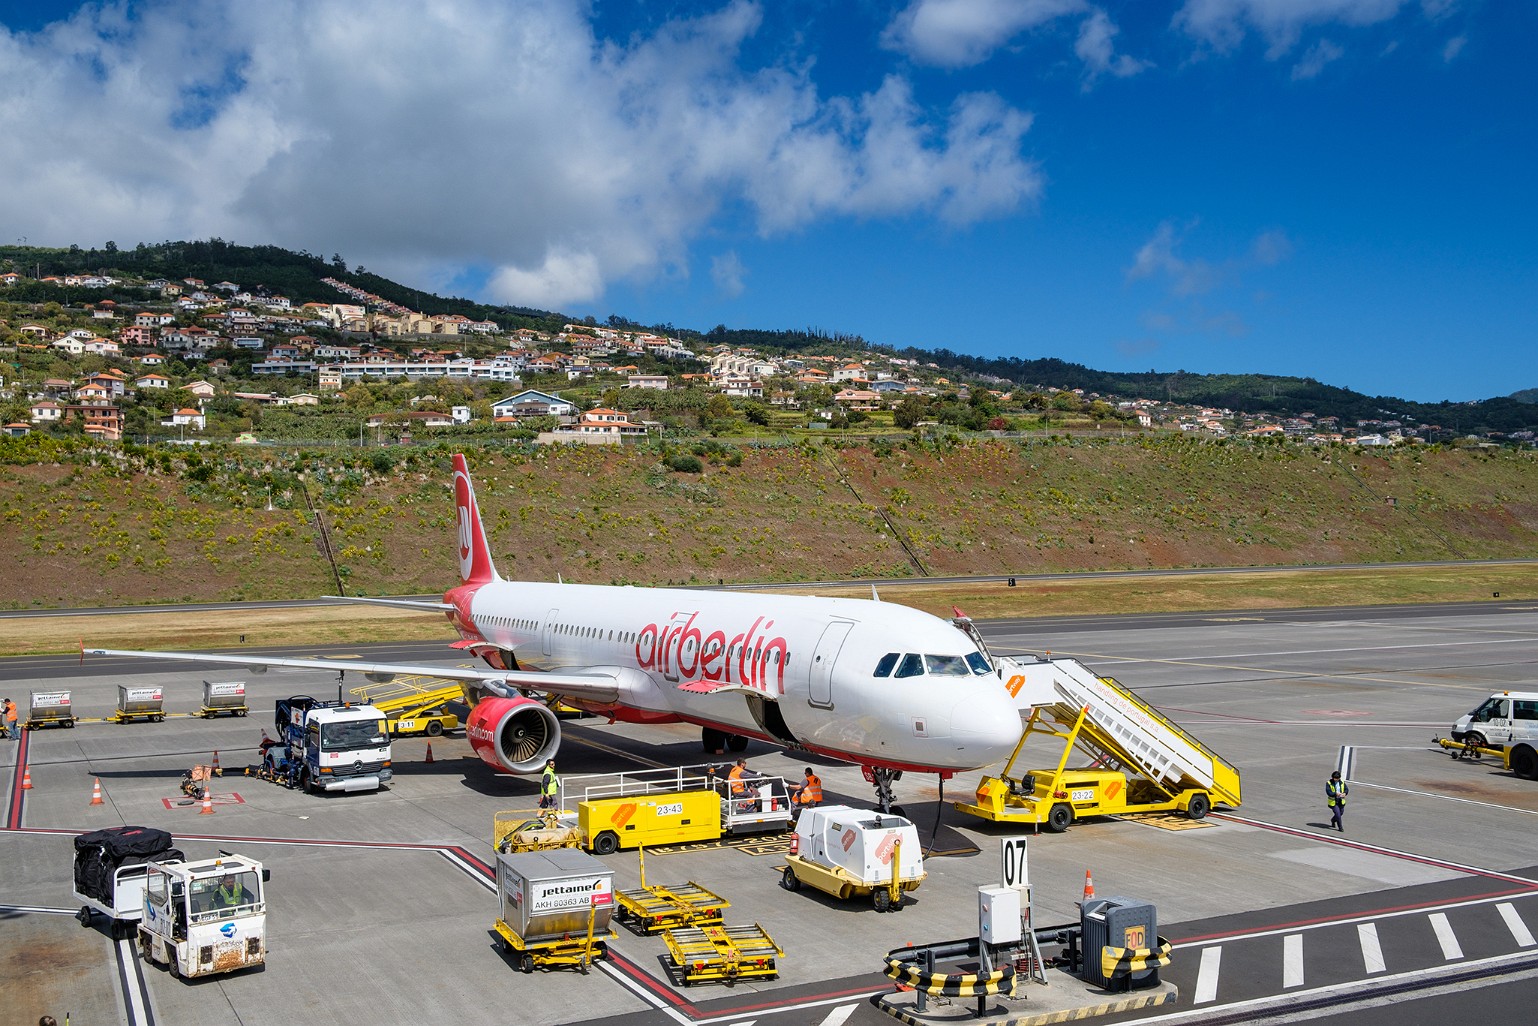 Madeira_0266_Flughafen_X-T2_22,3mm_f6,4_1600s_ISO200_LR69_sRGB_web